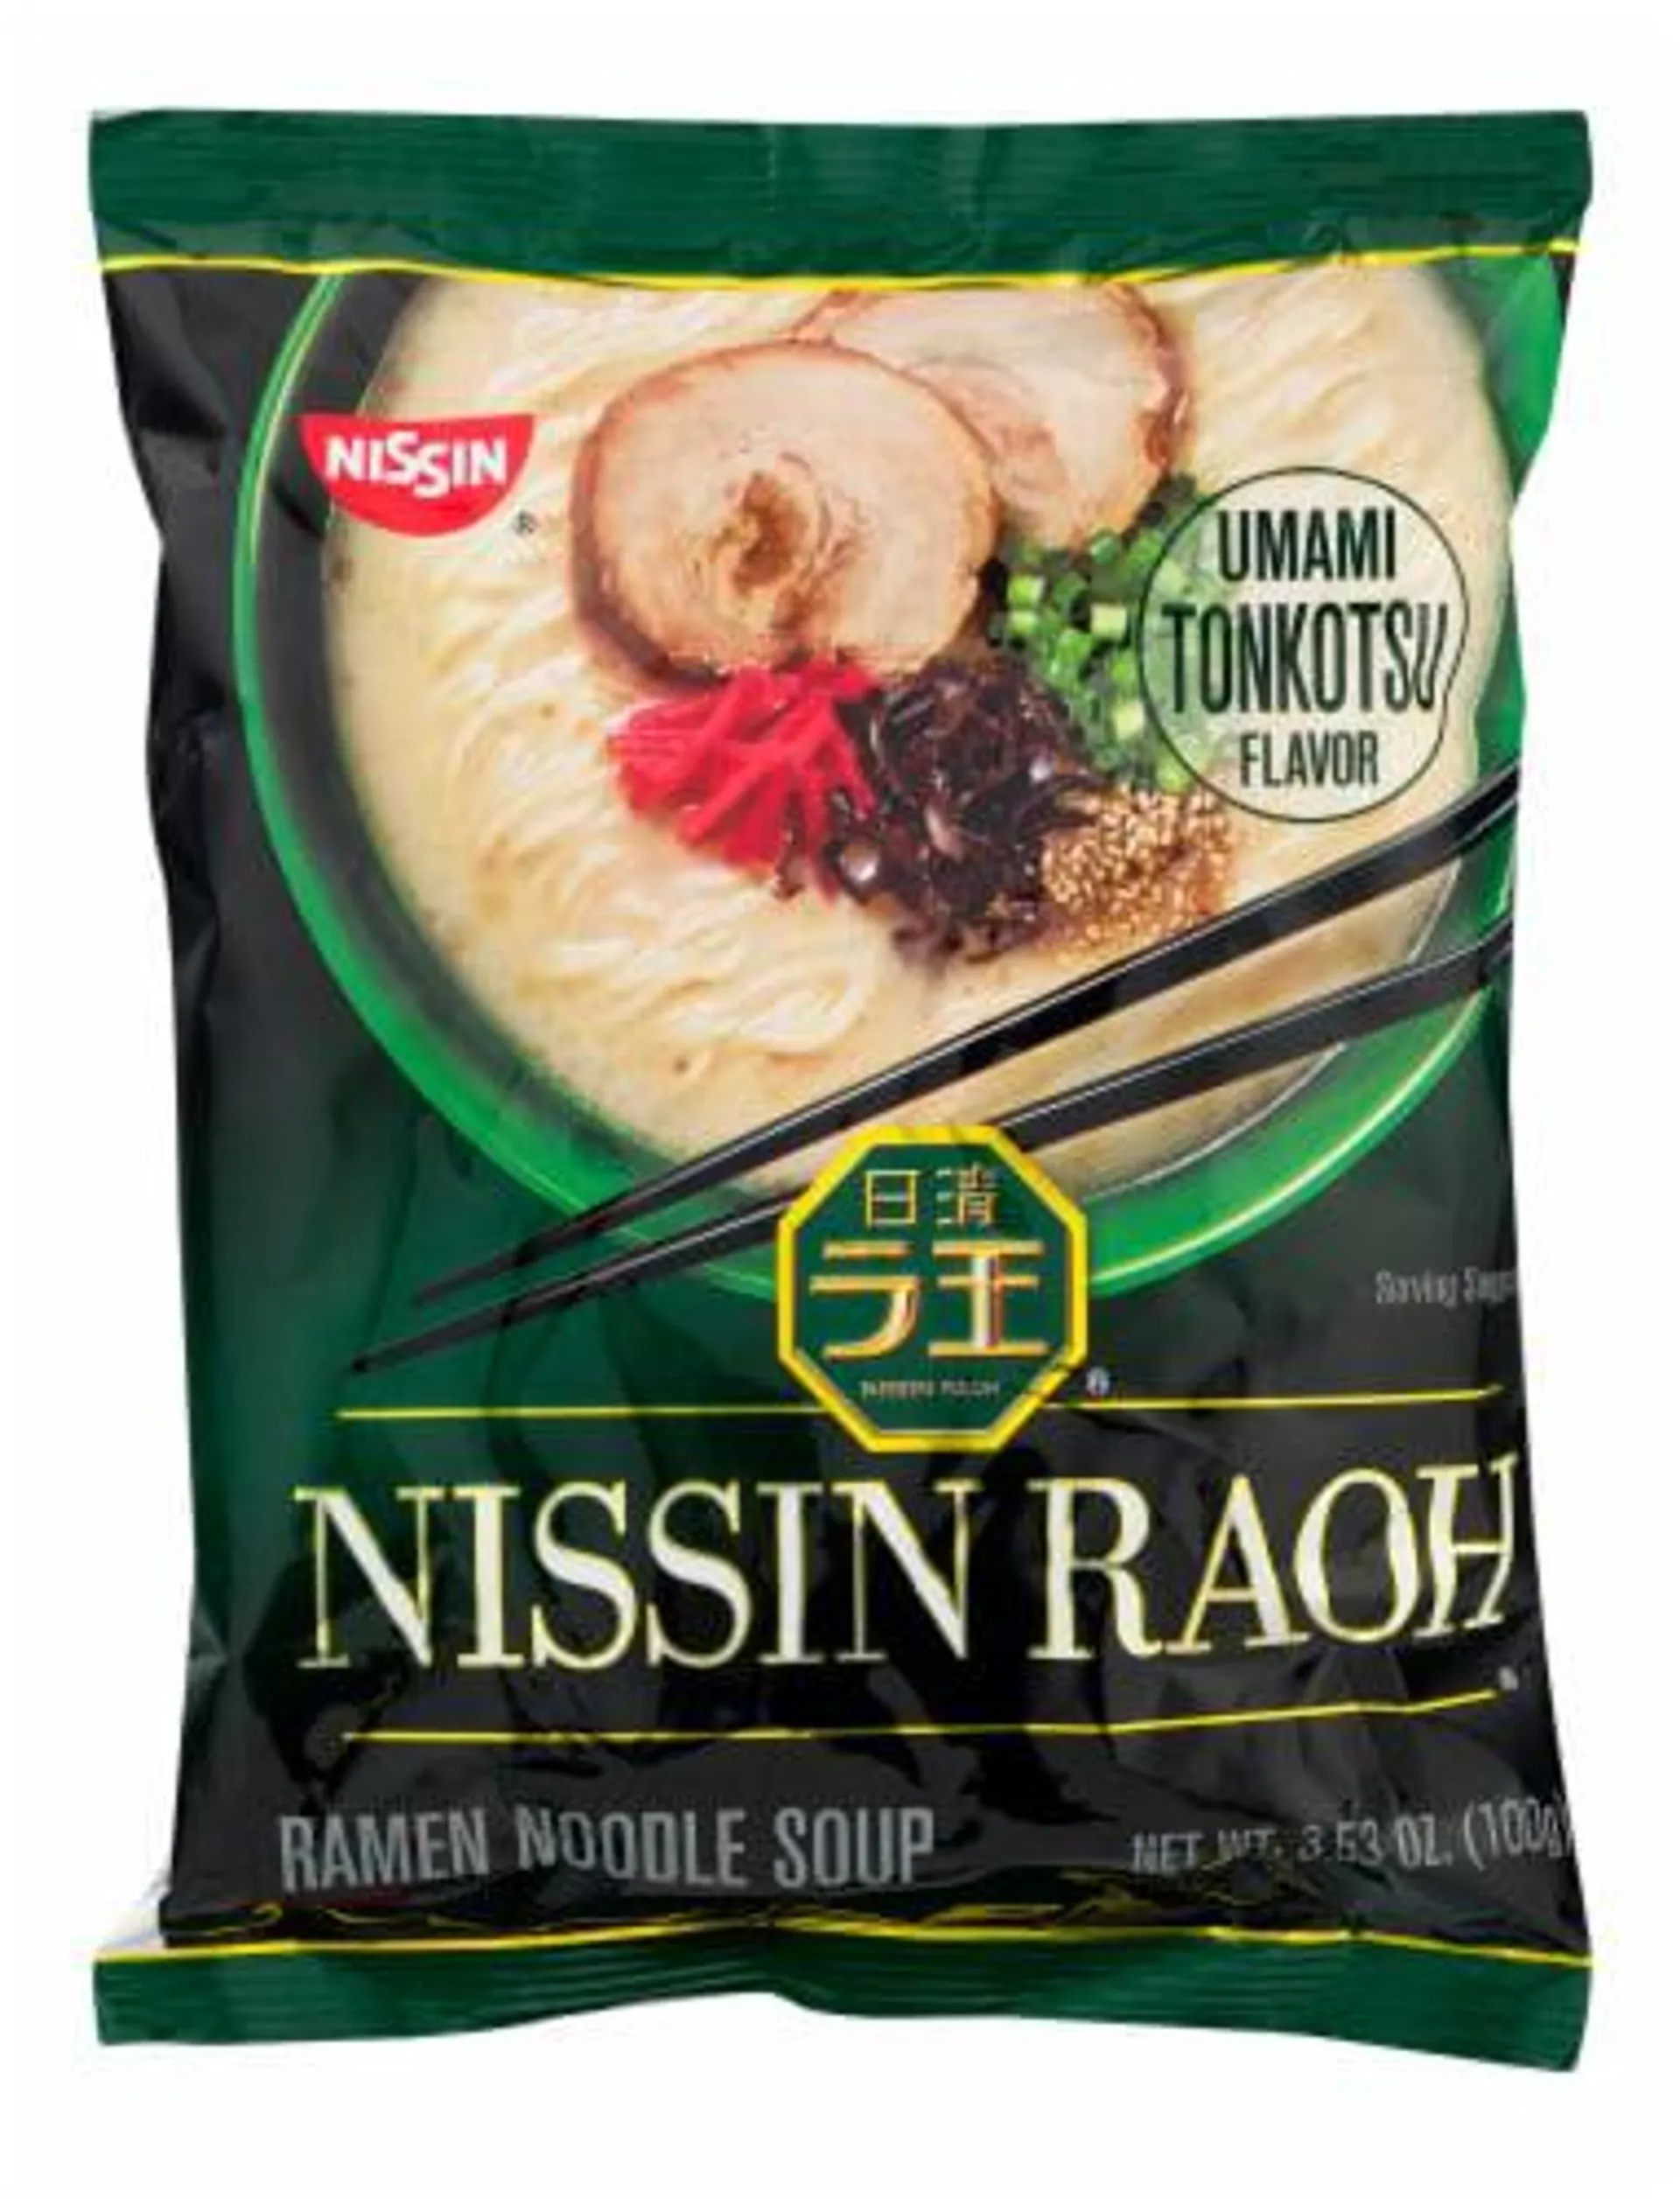 Nissin Raoh Tonkotsu Flavor Ramen Noodle Soup